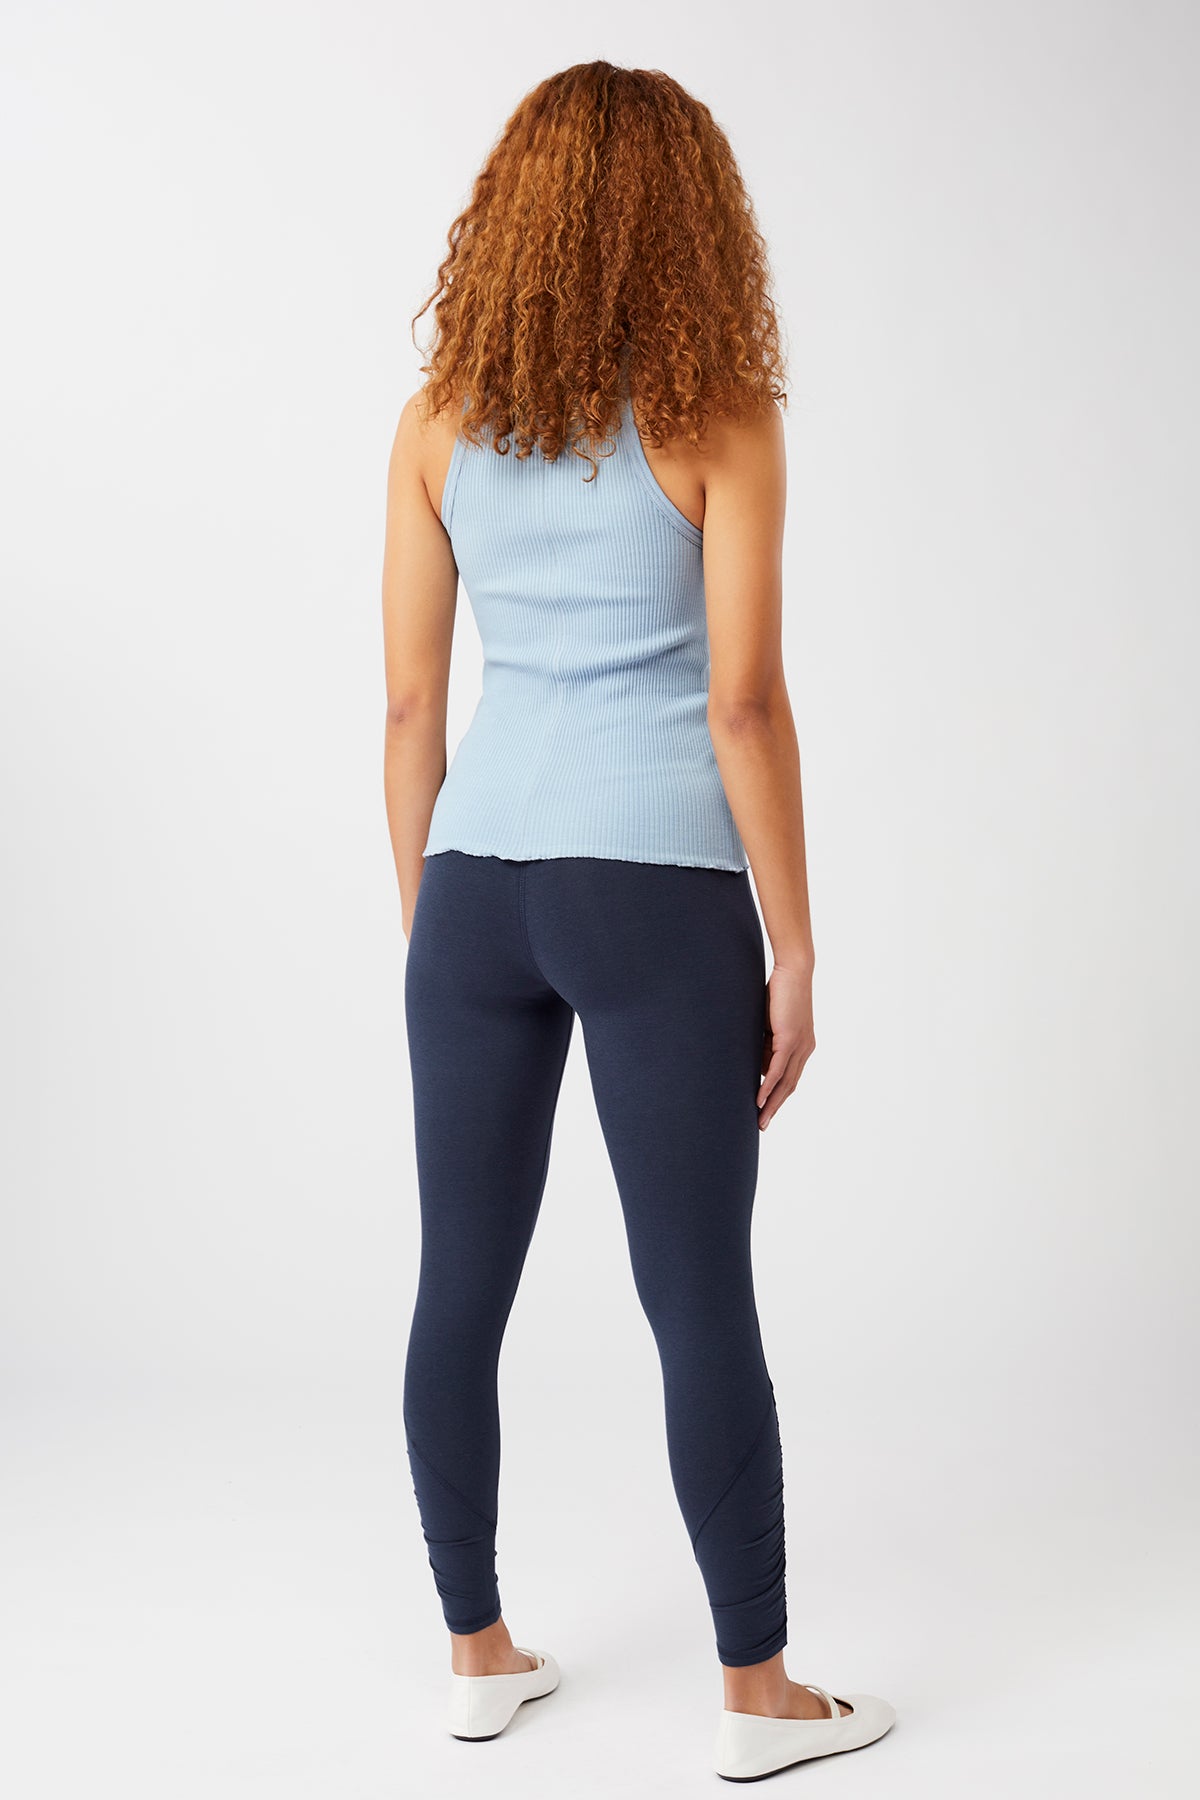 Mandala Yoga Legging Outfit Blau Rückseite - Cropped Ruffle Tight